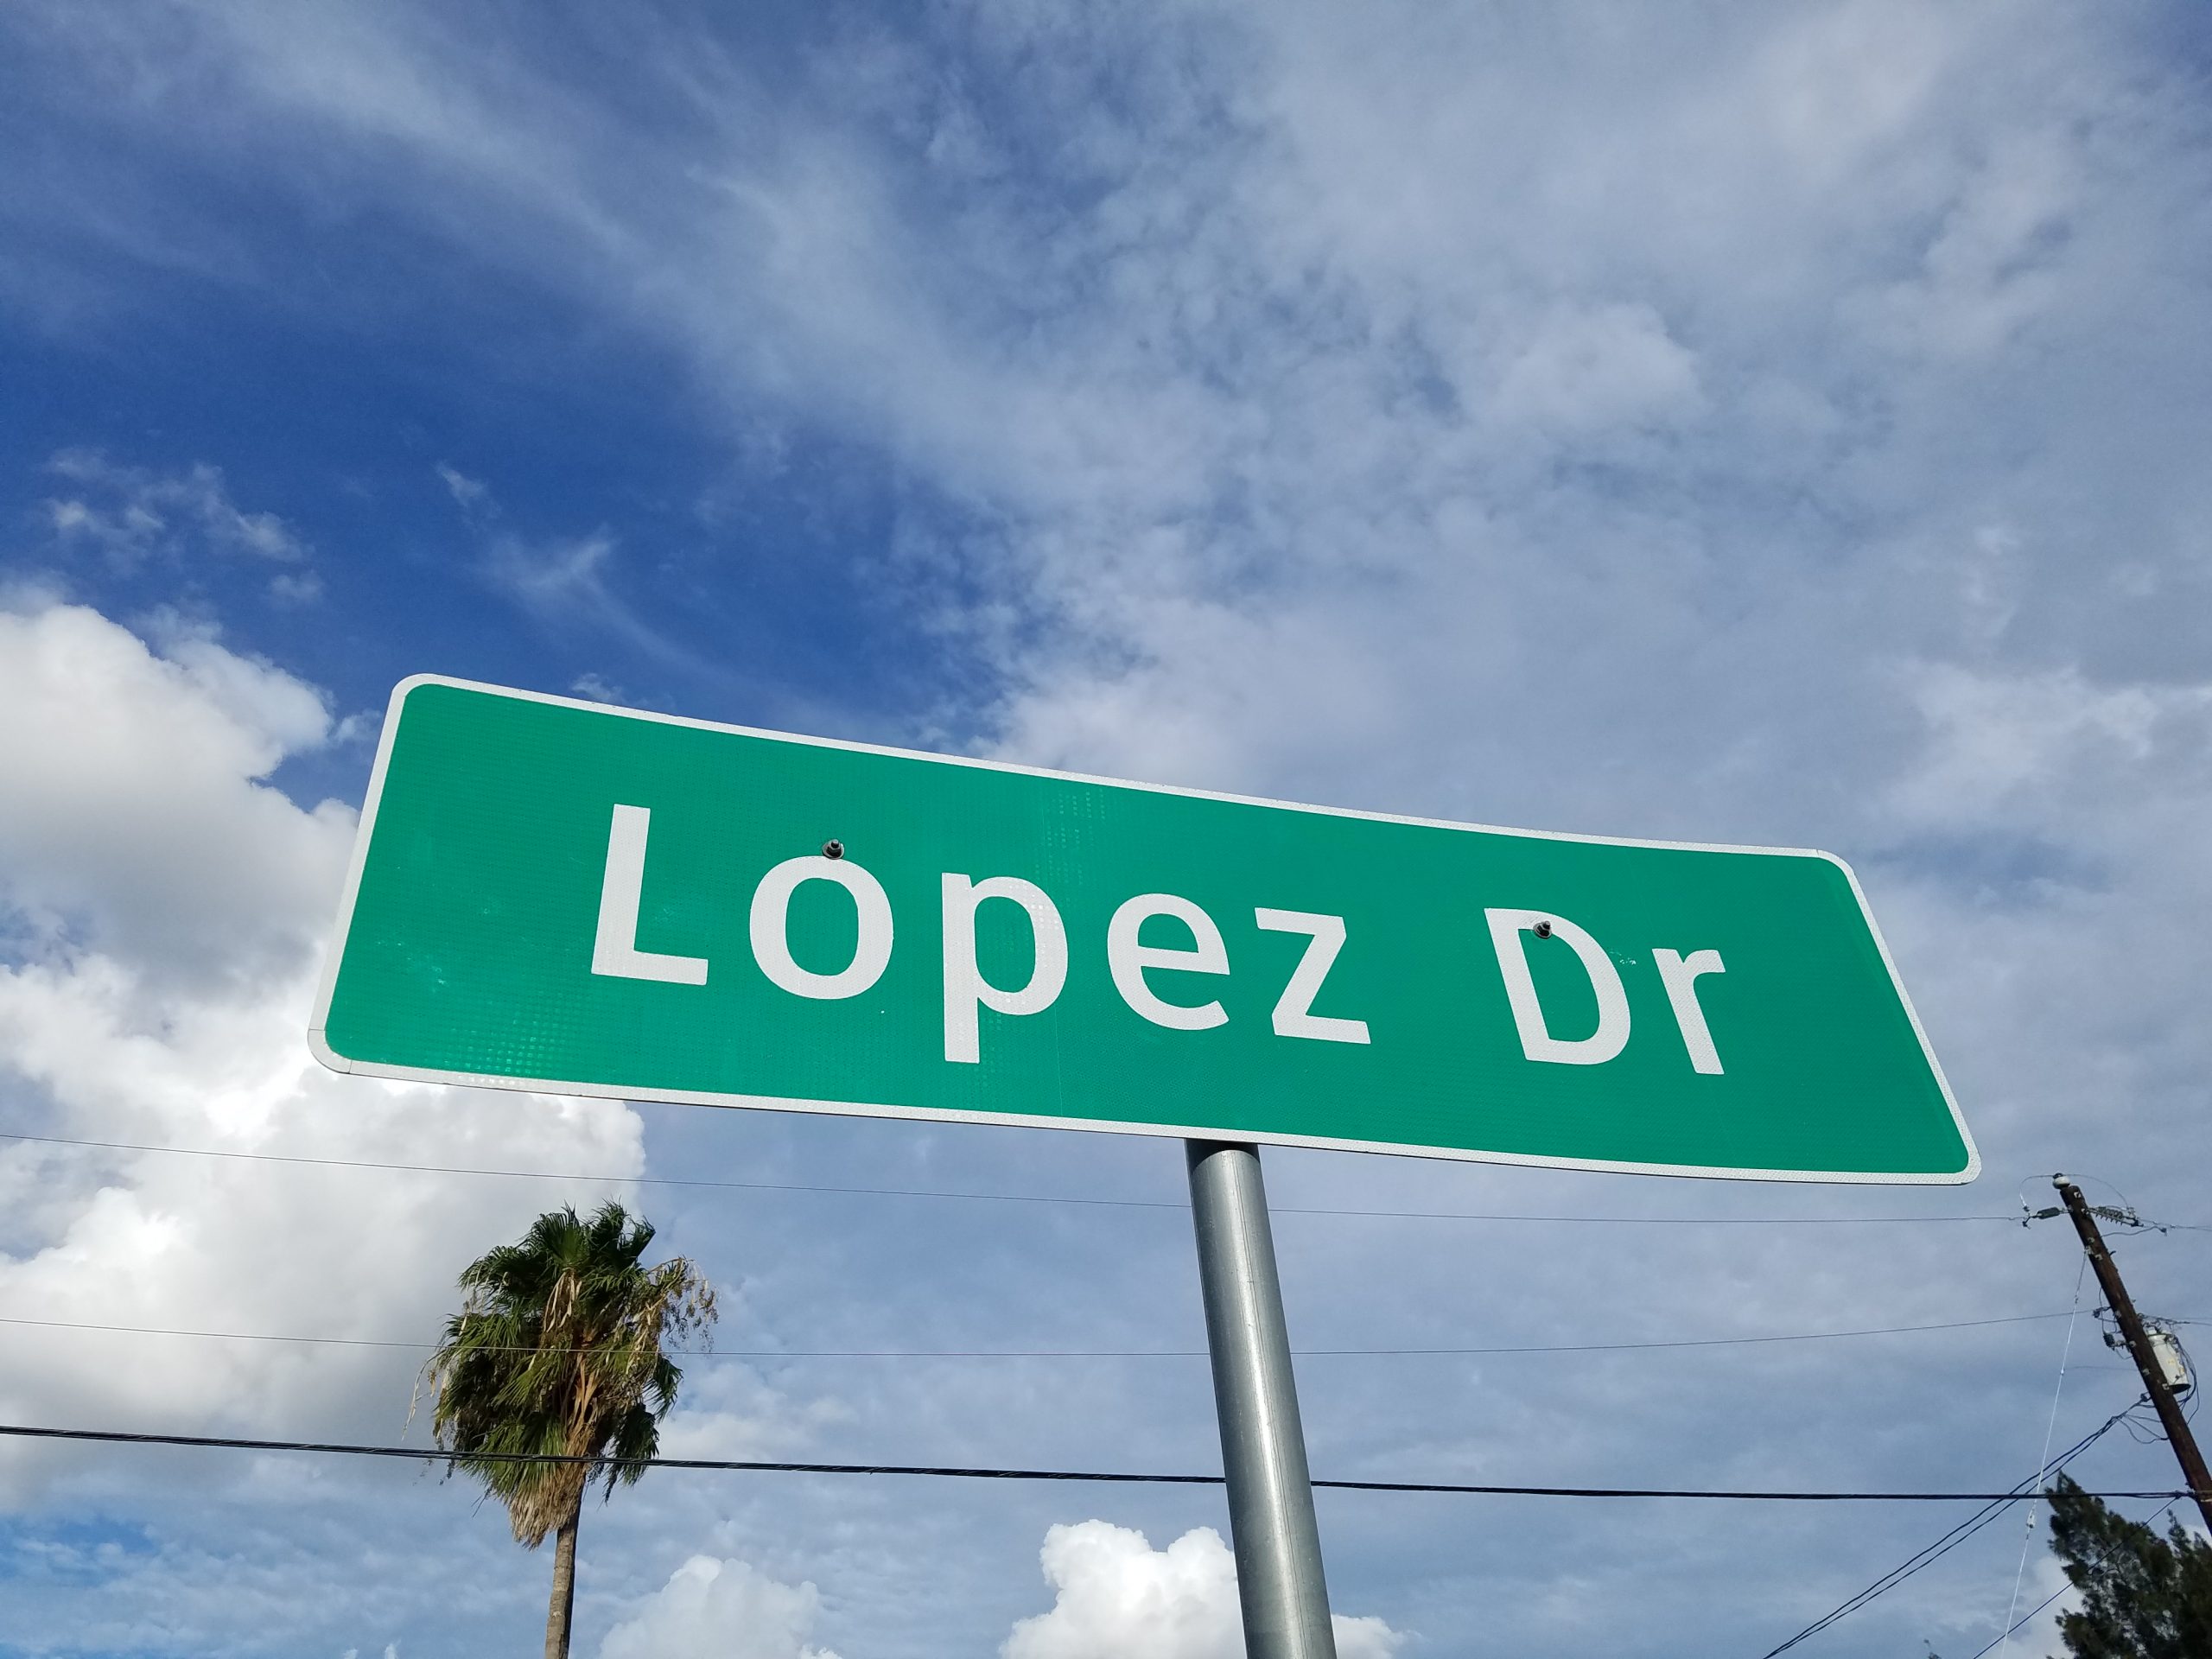 Lopez Drive